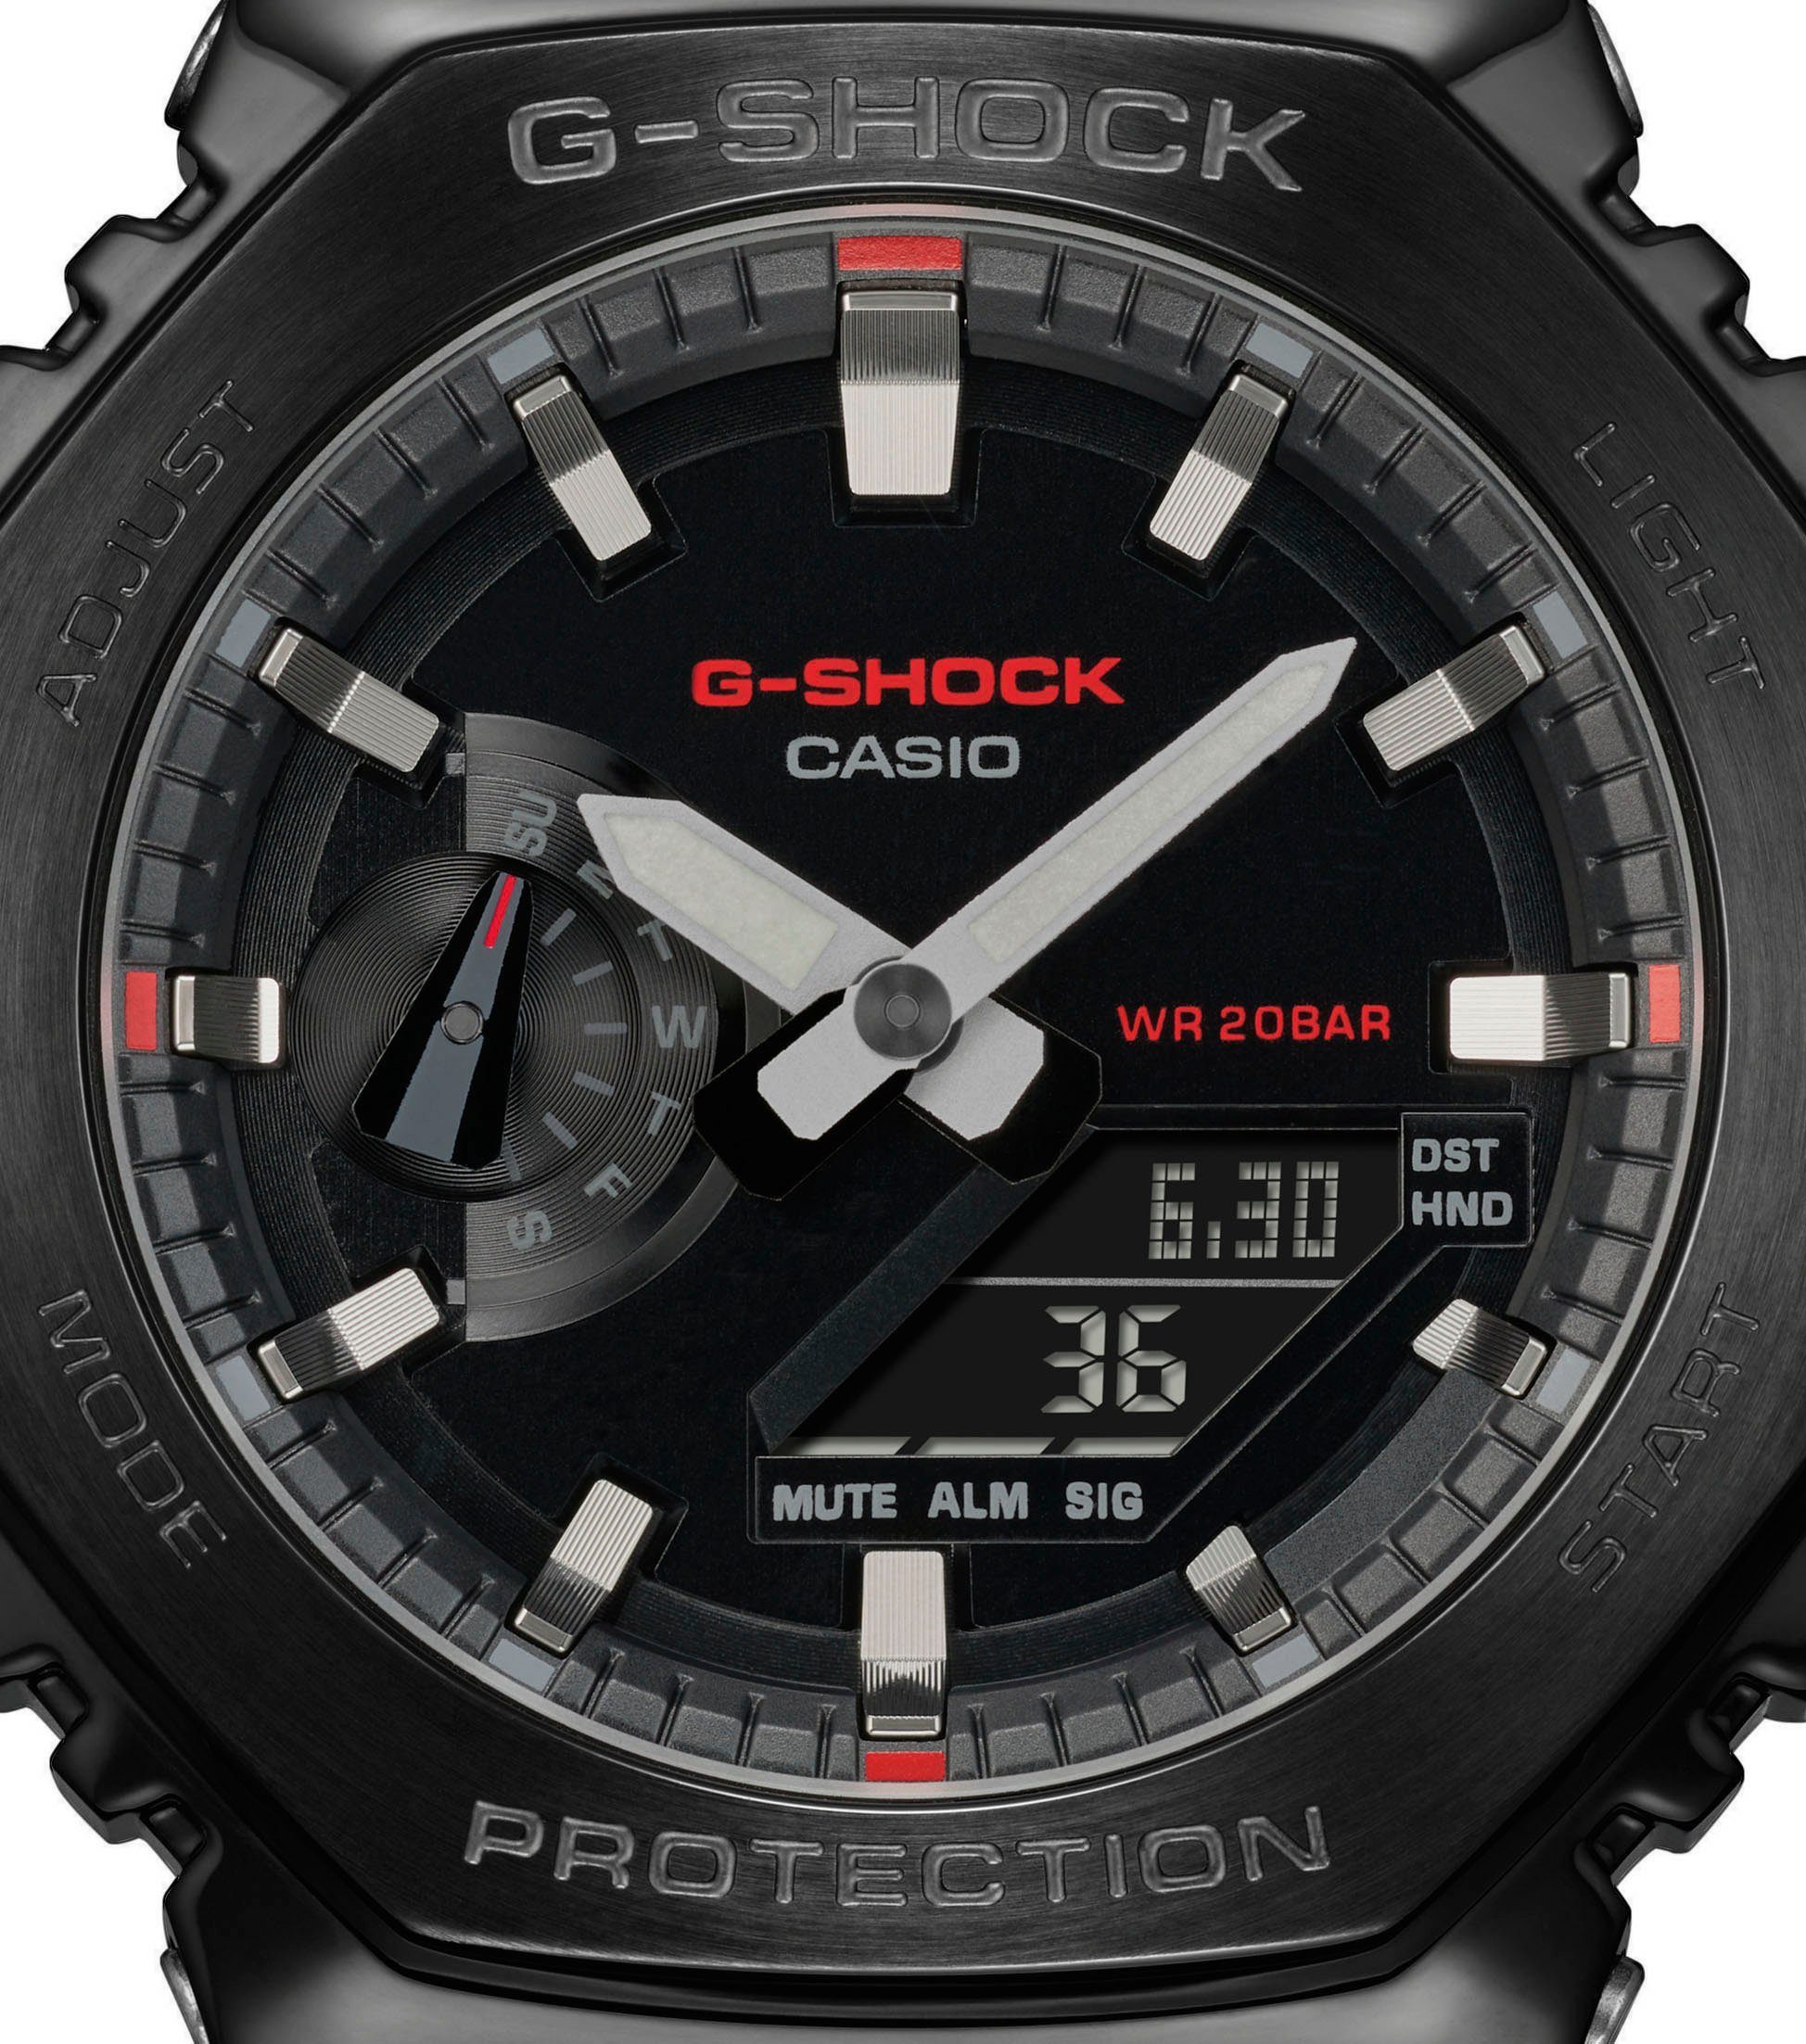 GM-2100CB-1AER Chronograph G-SHOCK CASIO